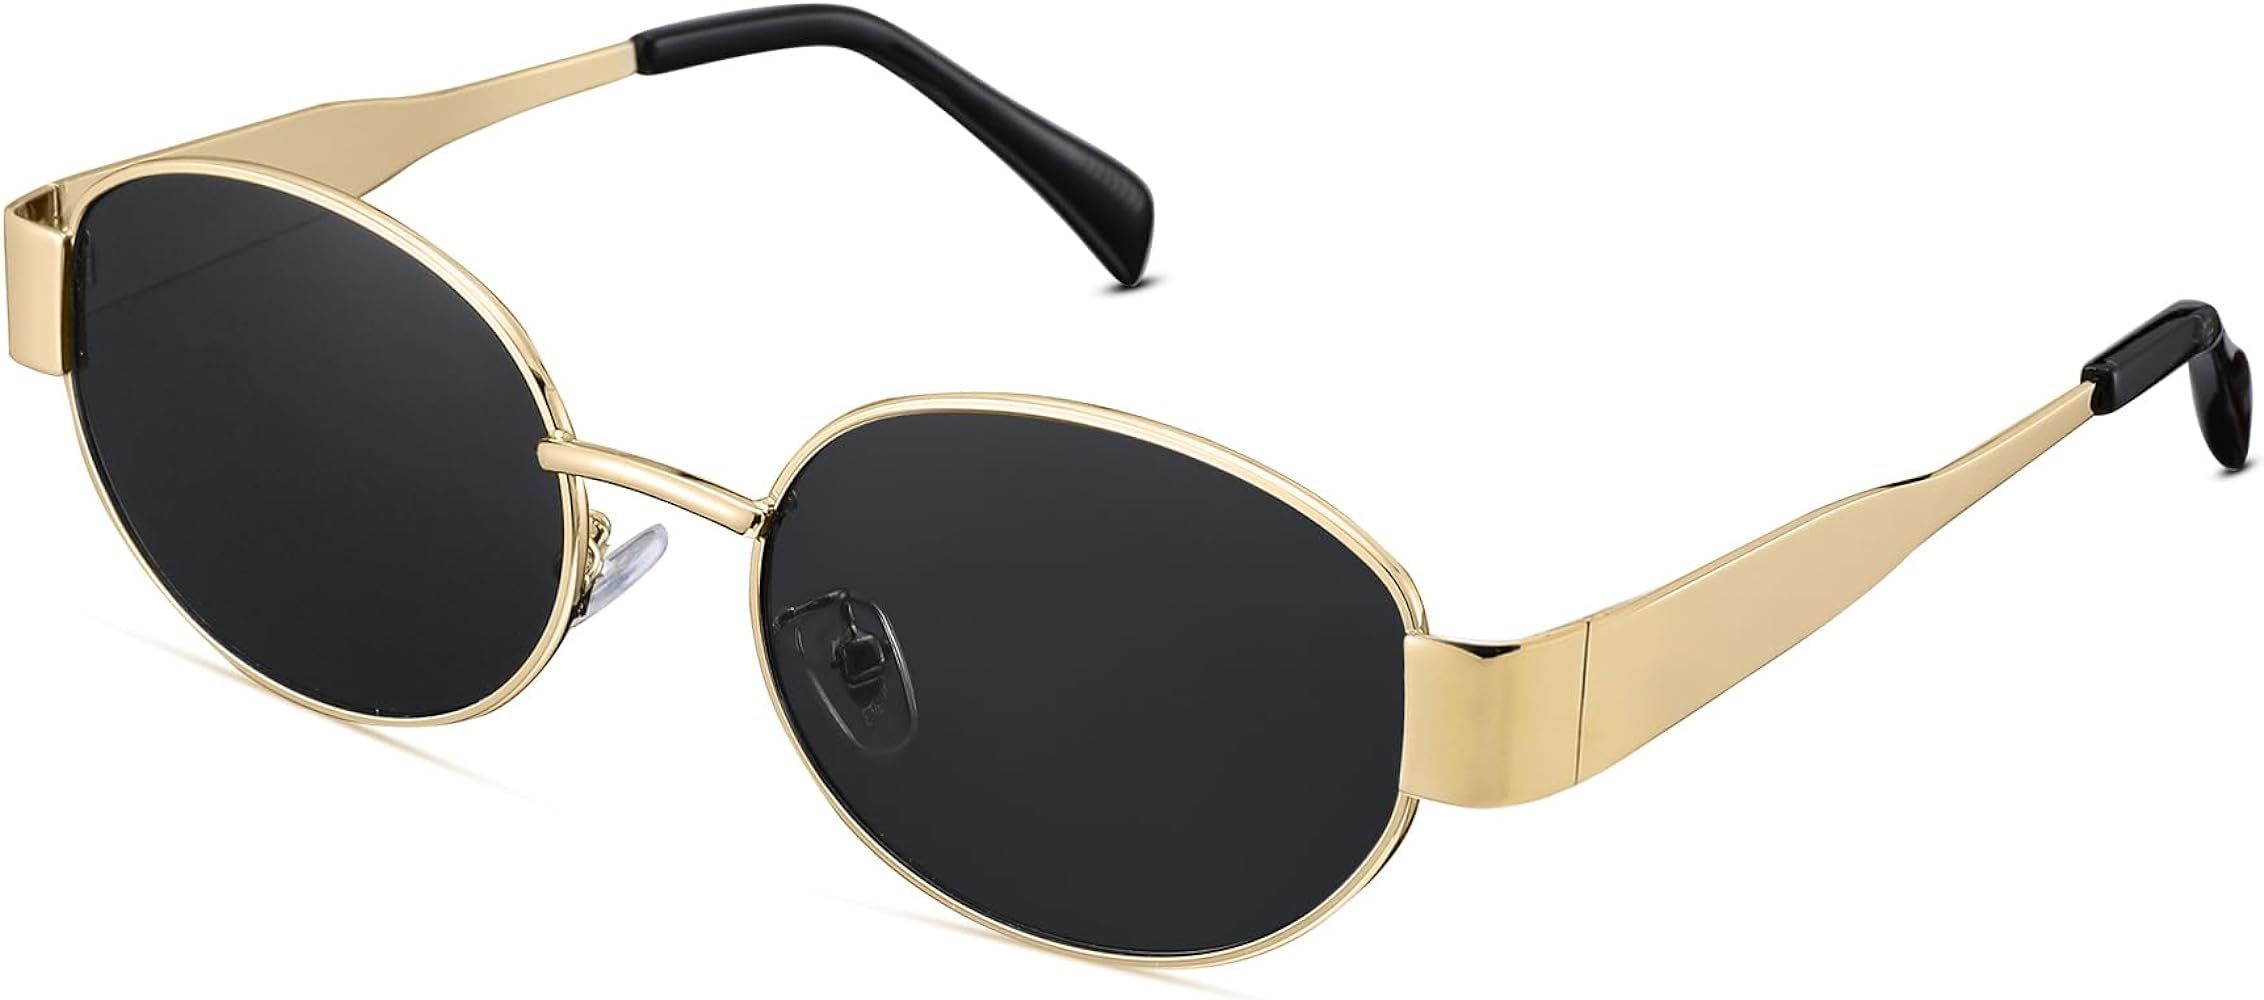 Retro Oval Sunglasses for Women Men - Trendy Gold Sun Glasses - Fashion Metal Frame Shades | Amazon (US)